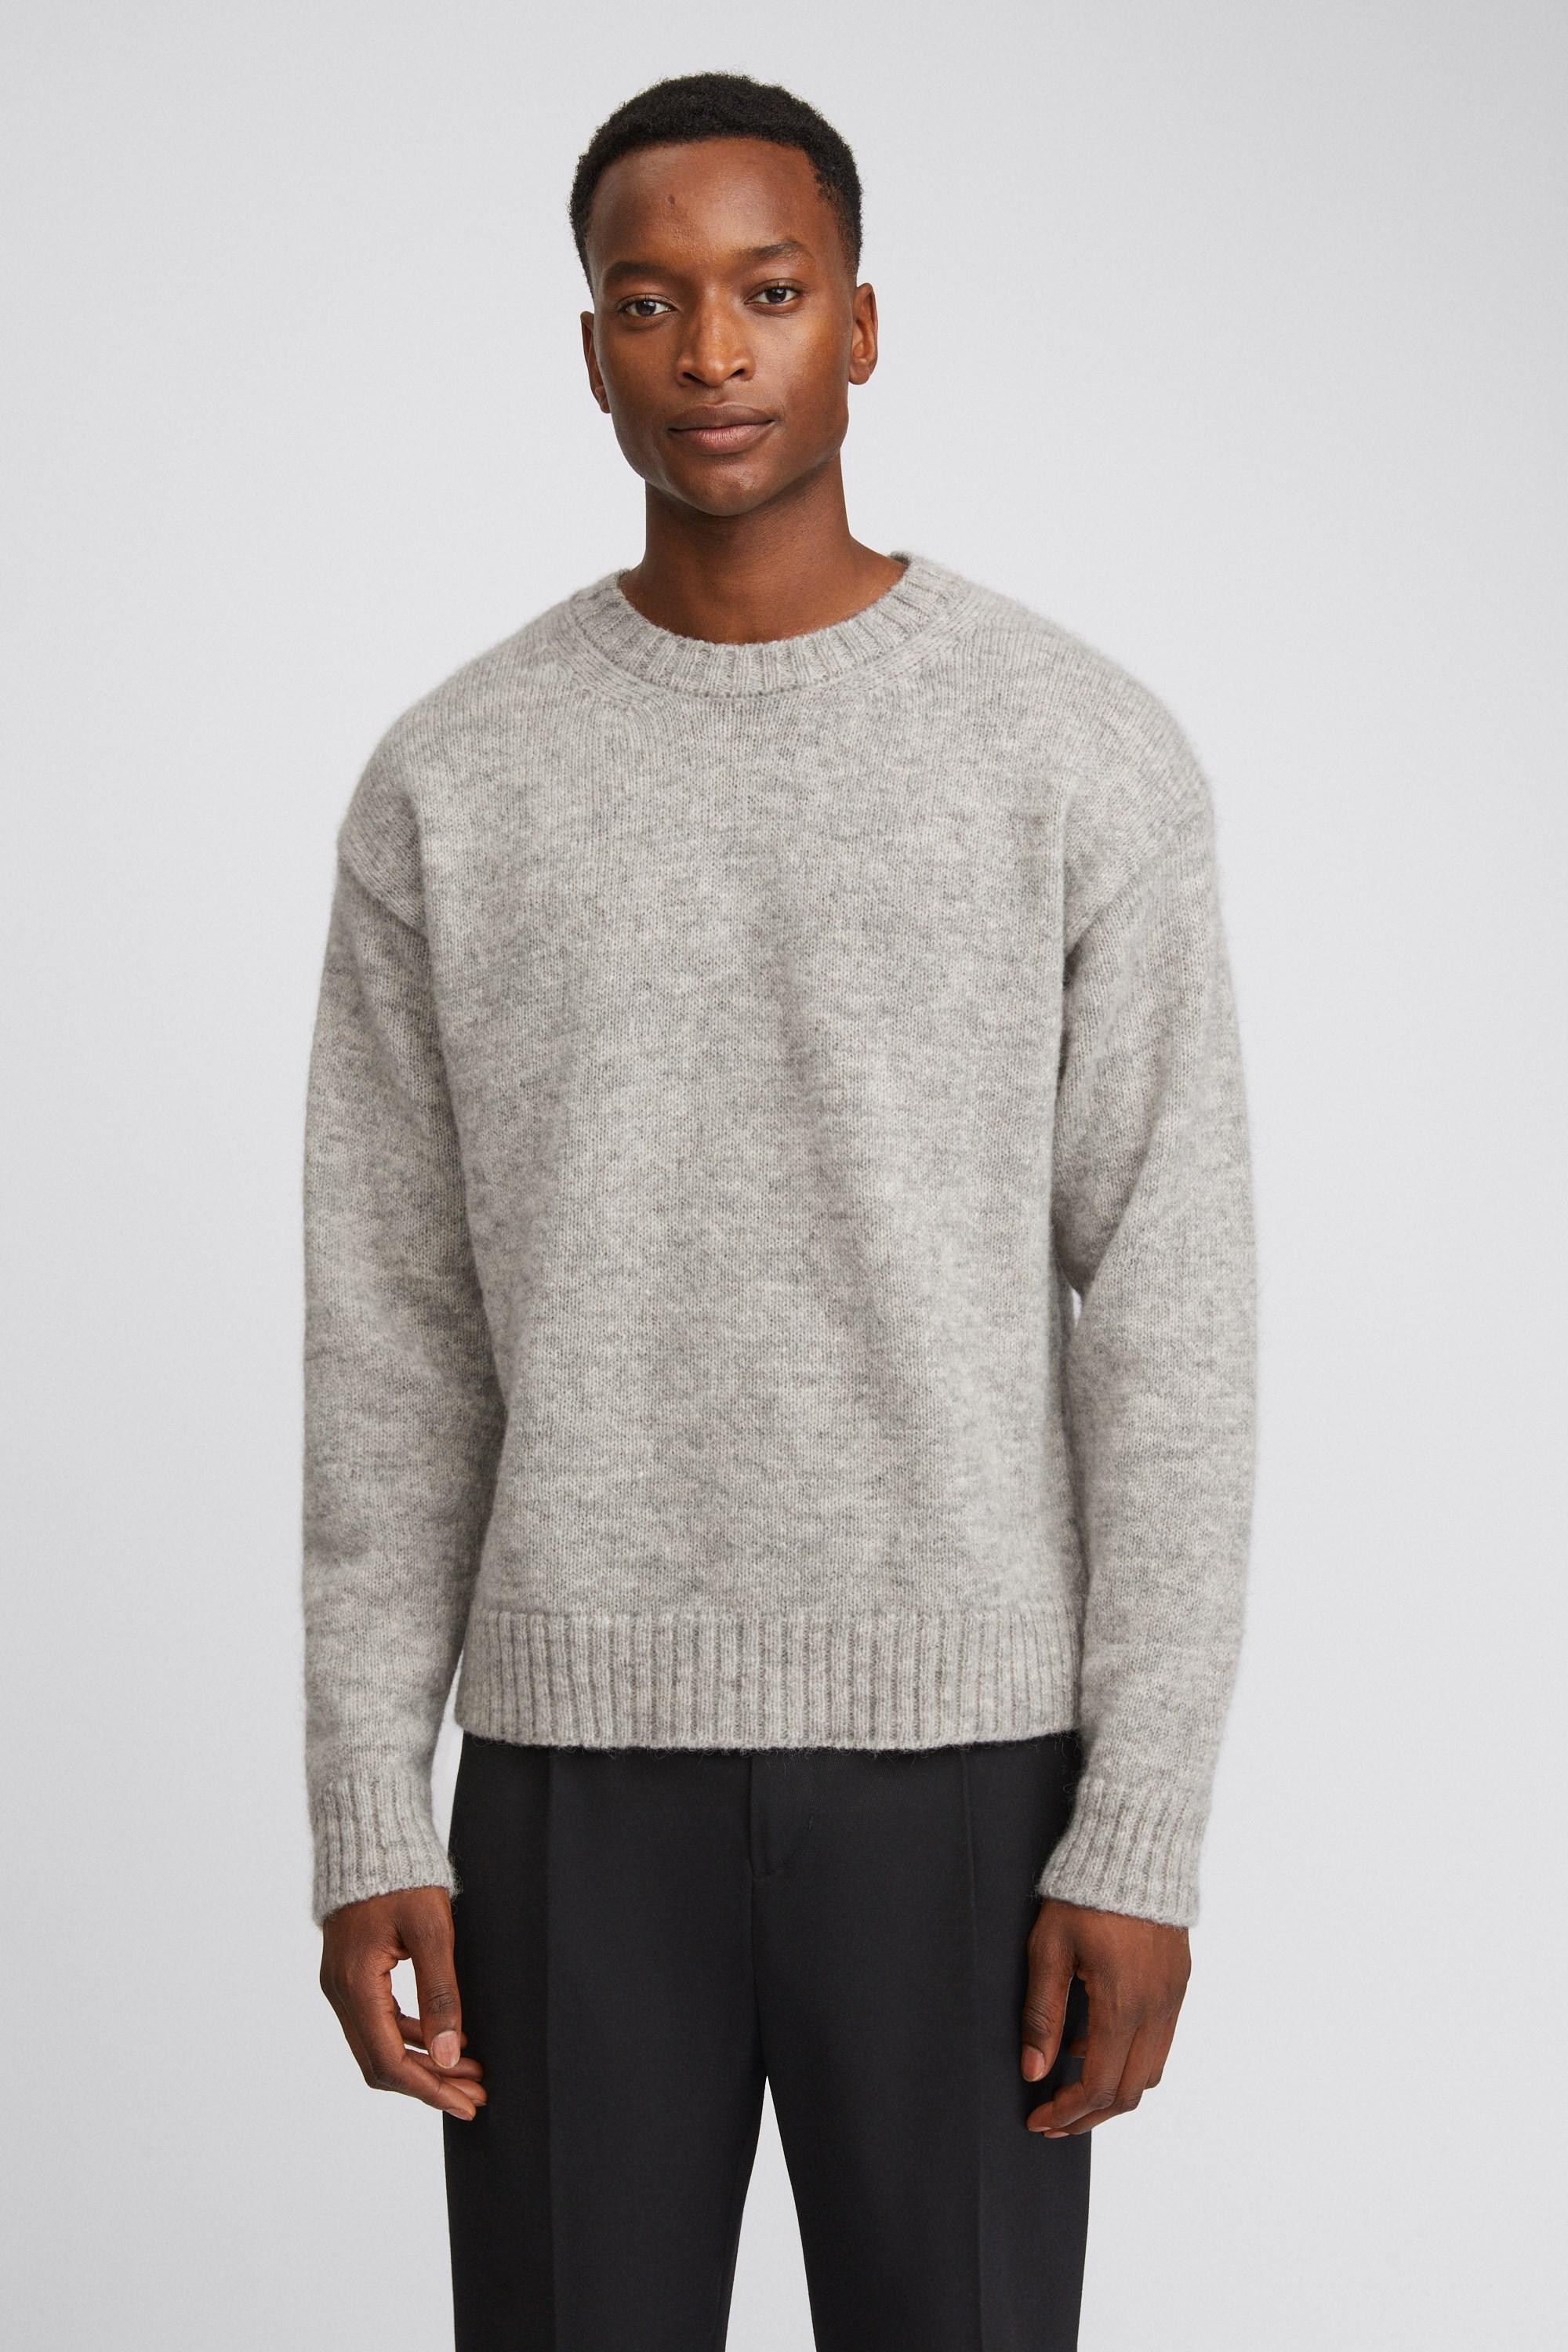 mynte Hviske Hoved Filippa K Wool Max Sweater in Light Grey Melange (Gray) - Lyst